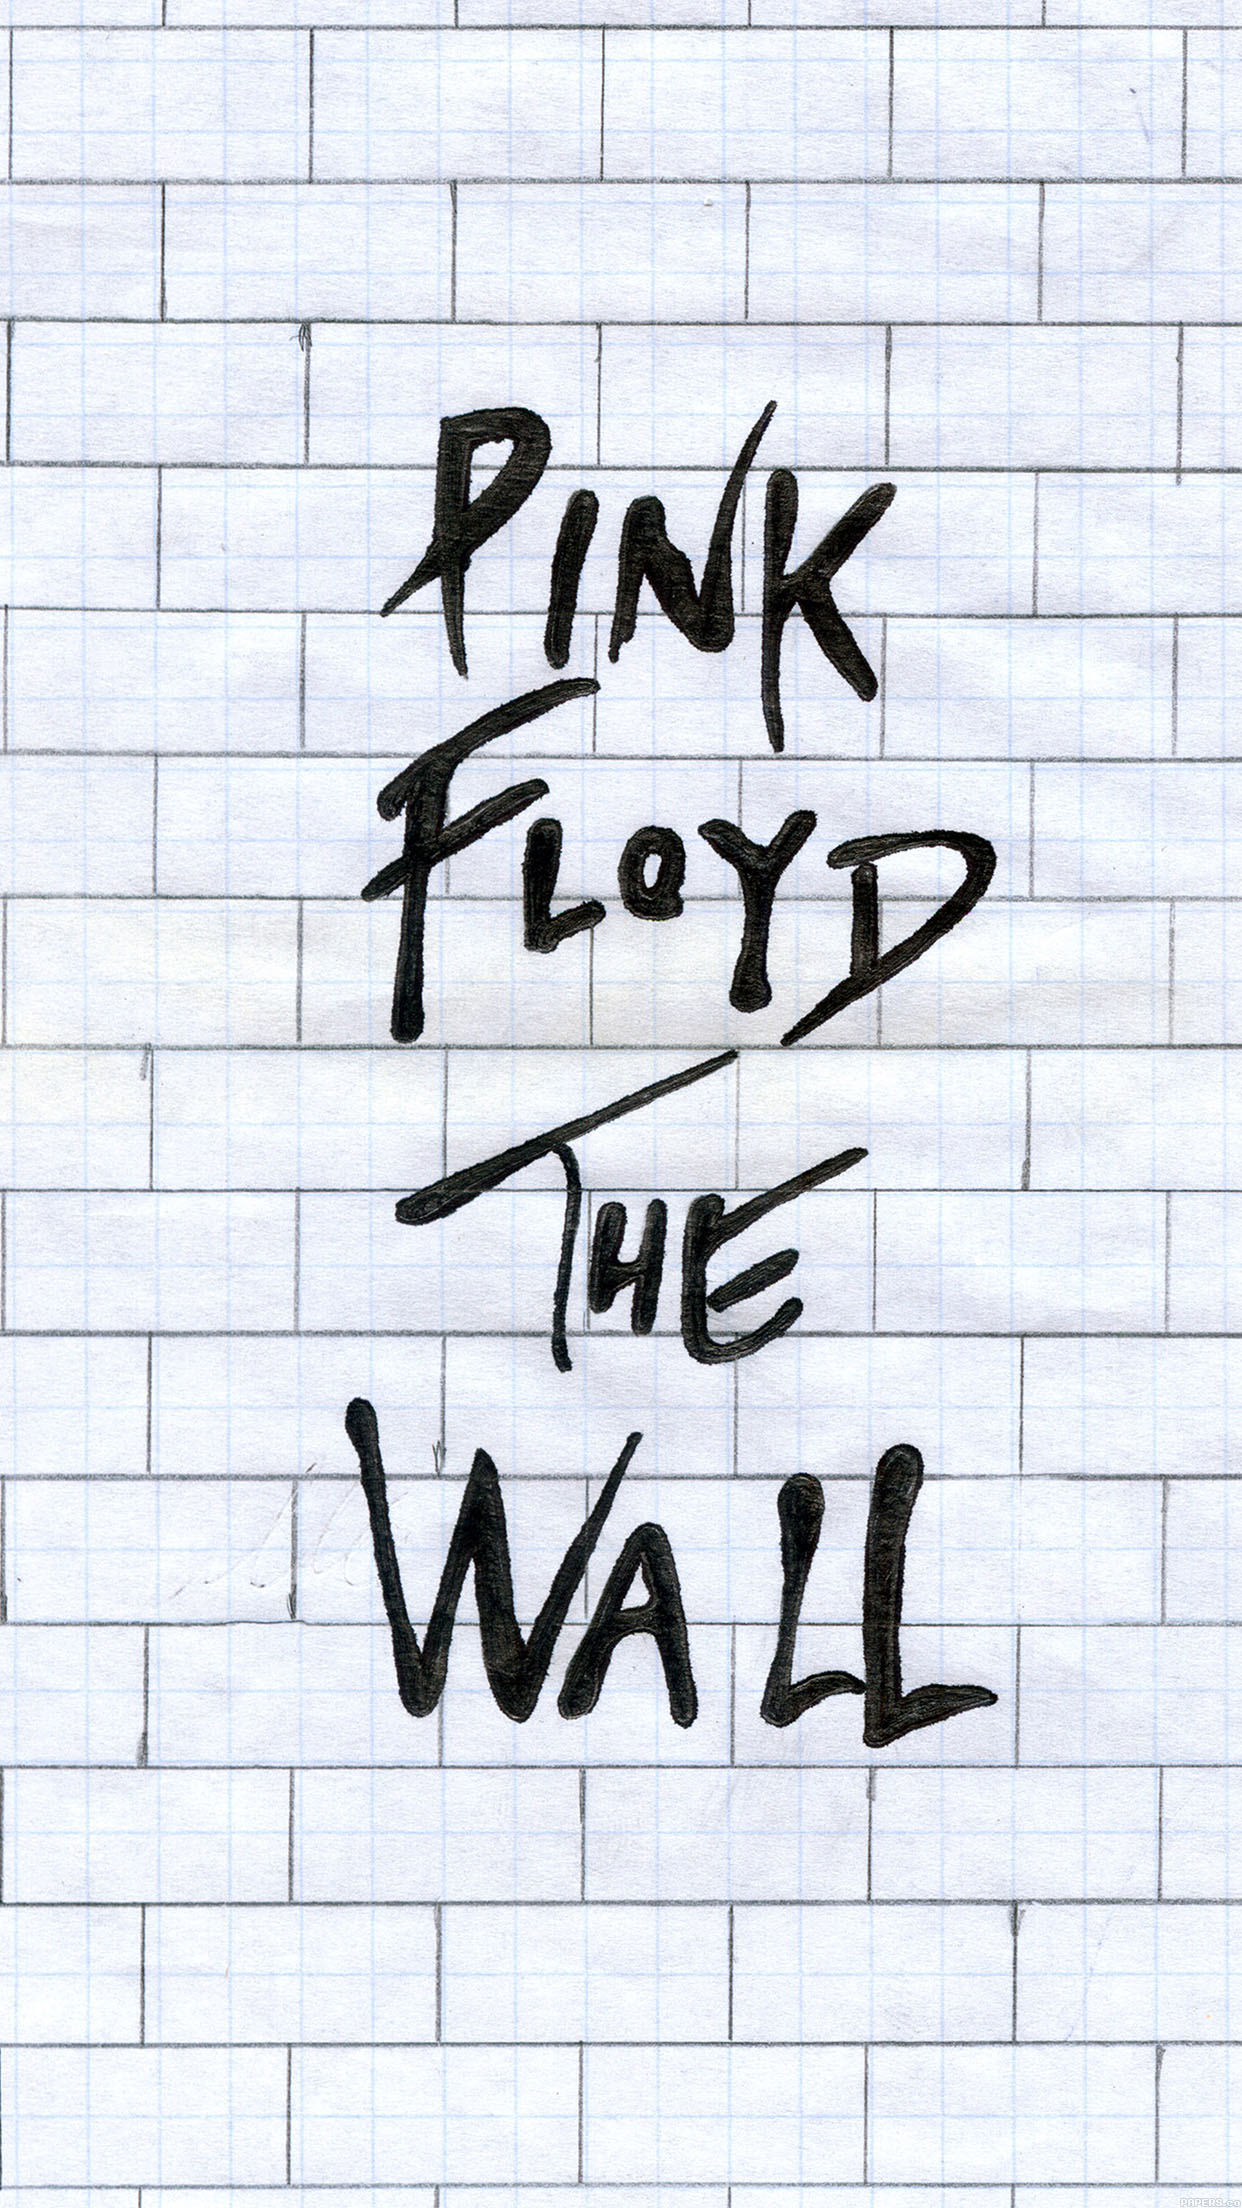 The Wall Pink Floyd Wallpaper Free HD Wallpaper